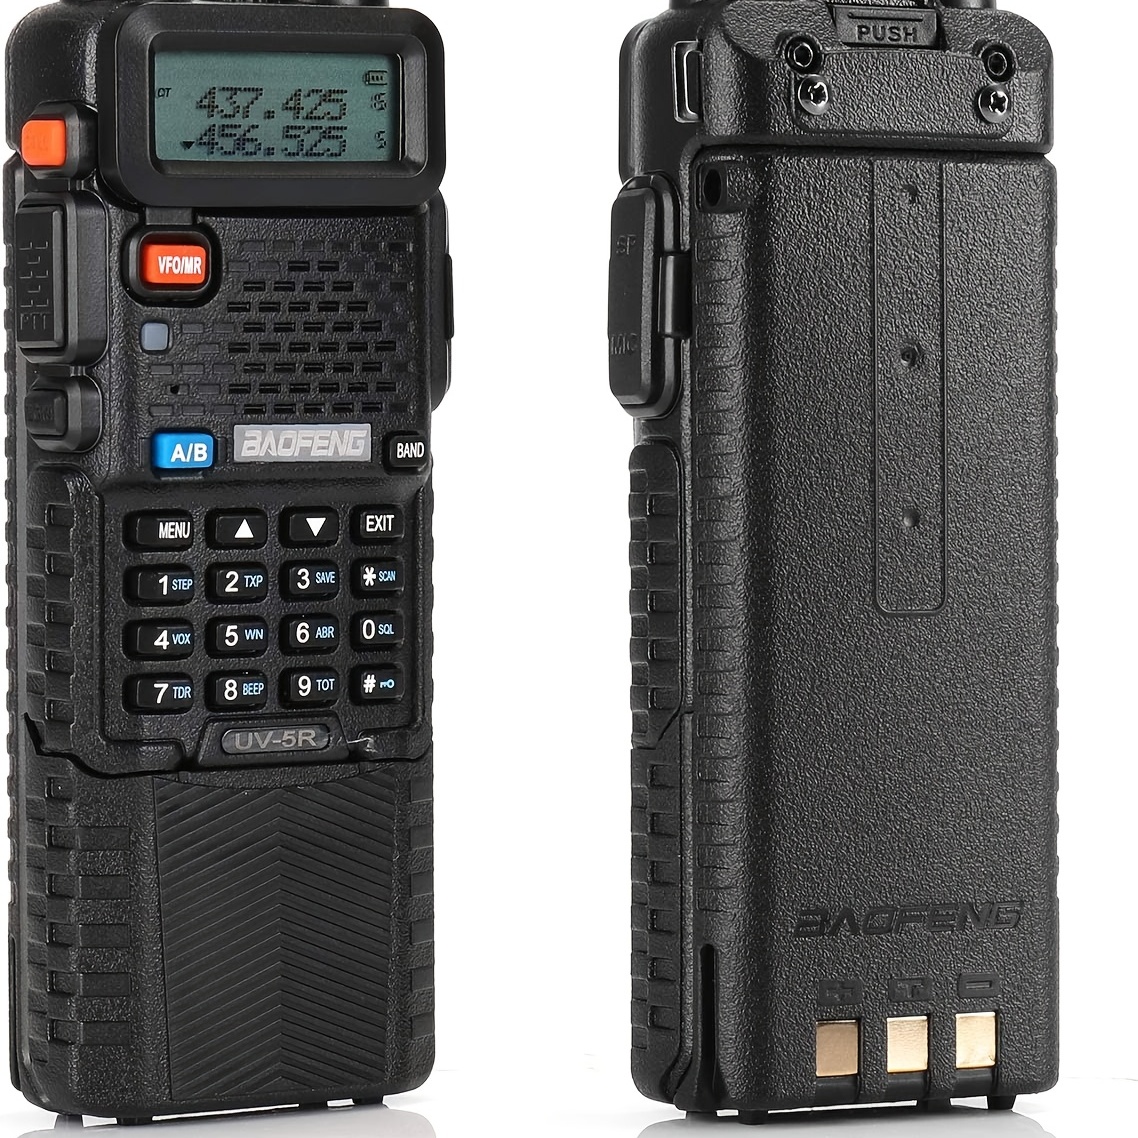 3800mAh extended battery for UV-5R radio [Baofeng]